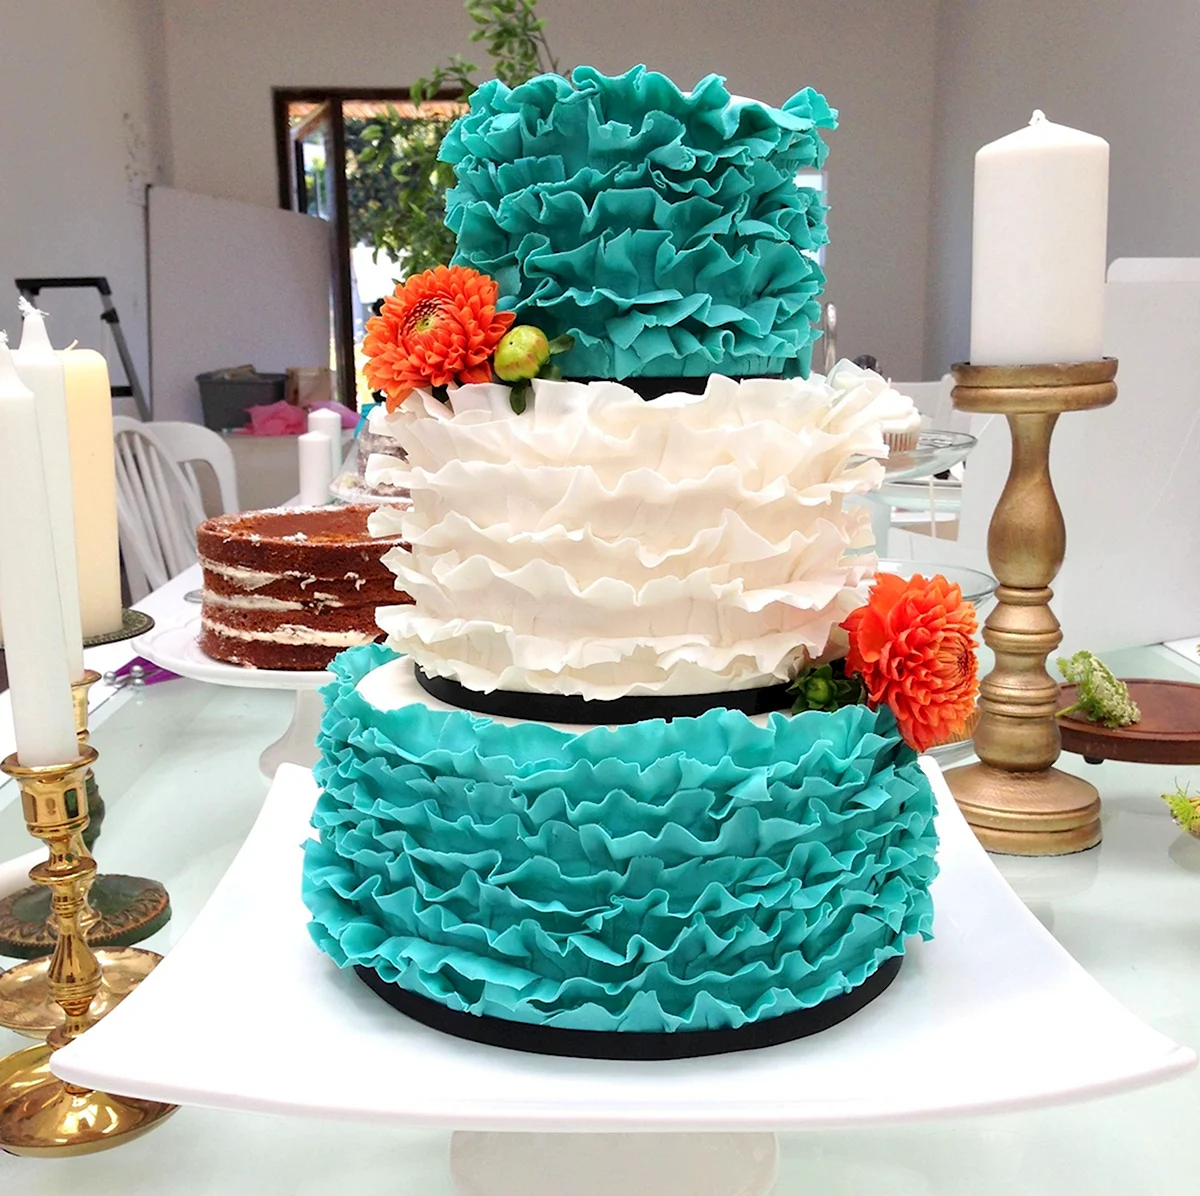 Тренды в тортах. Свадебный торт бирюзовый. Свадебный торт в бирюзовом цвете. Стильный торт. Торт бирюзовый кремовый.